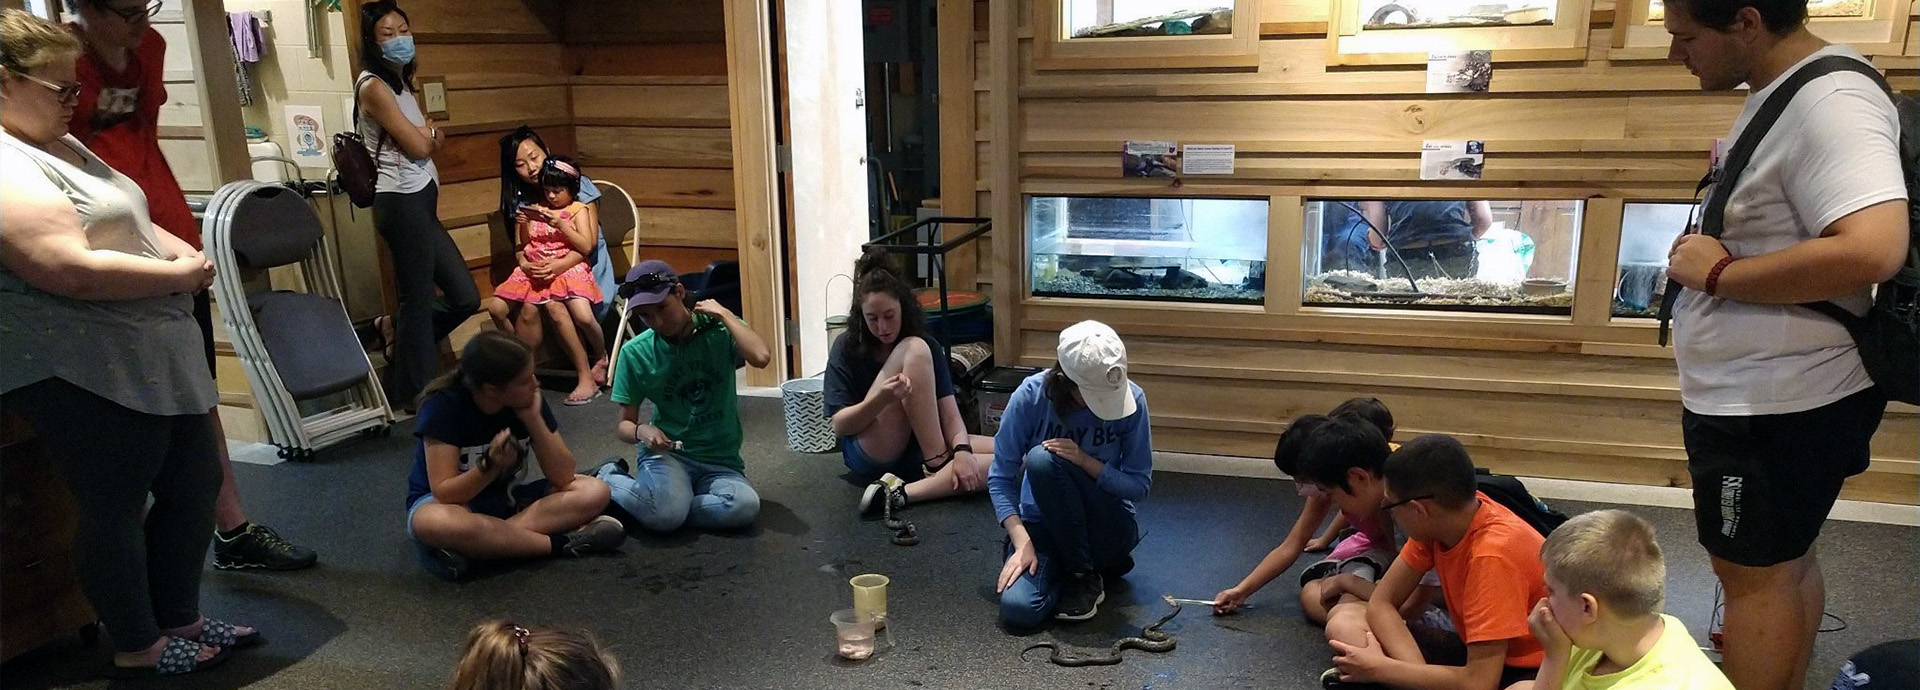 Slideshow Image - Staff and volunteers feeding the nature center animals